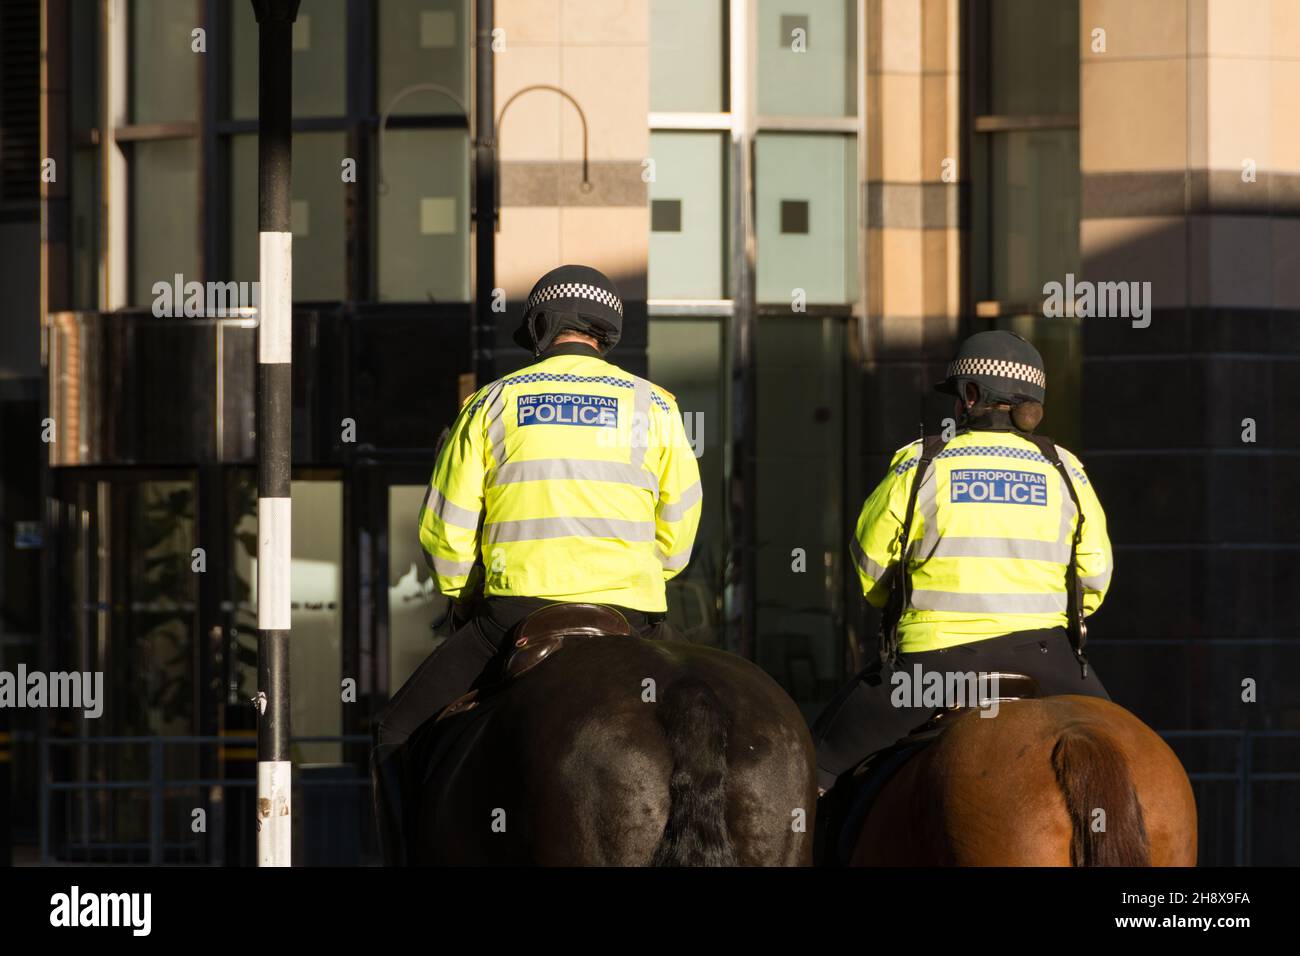 Two Mounted Police on horseback in Hammersmith, west London, England, U.K. Stock Photo